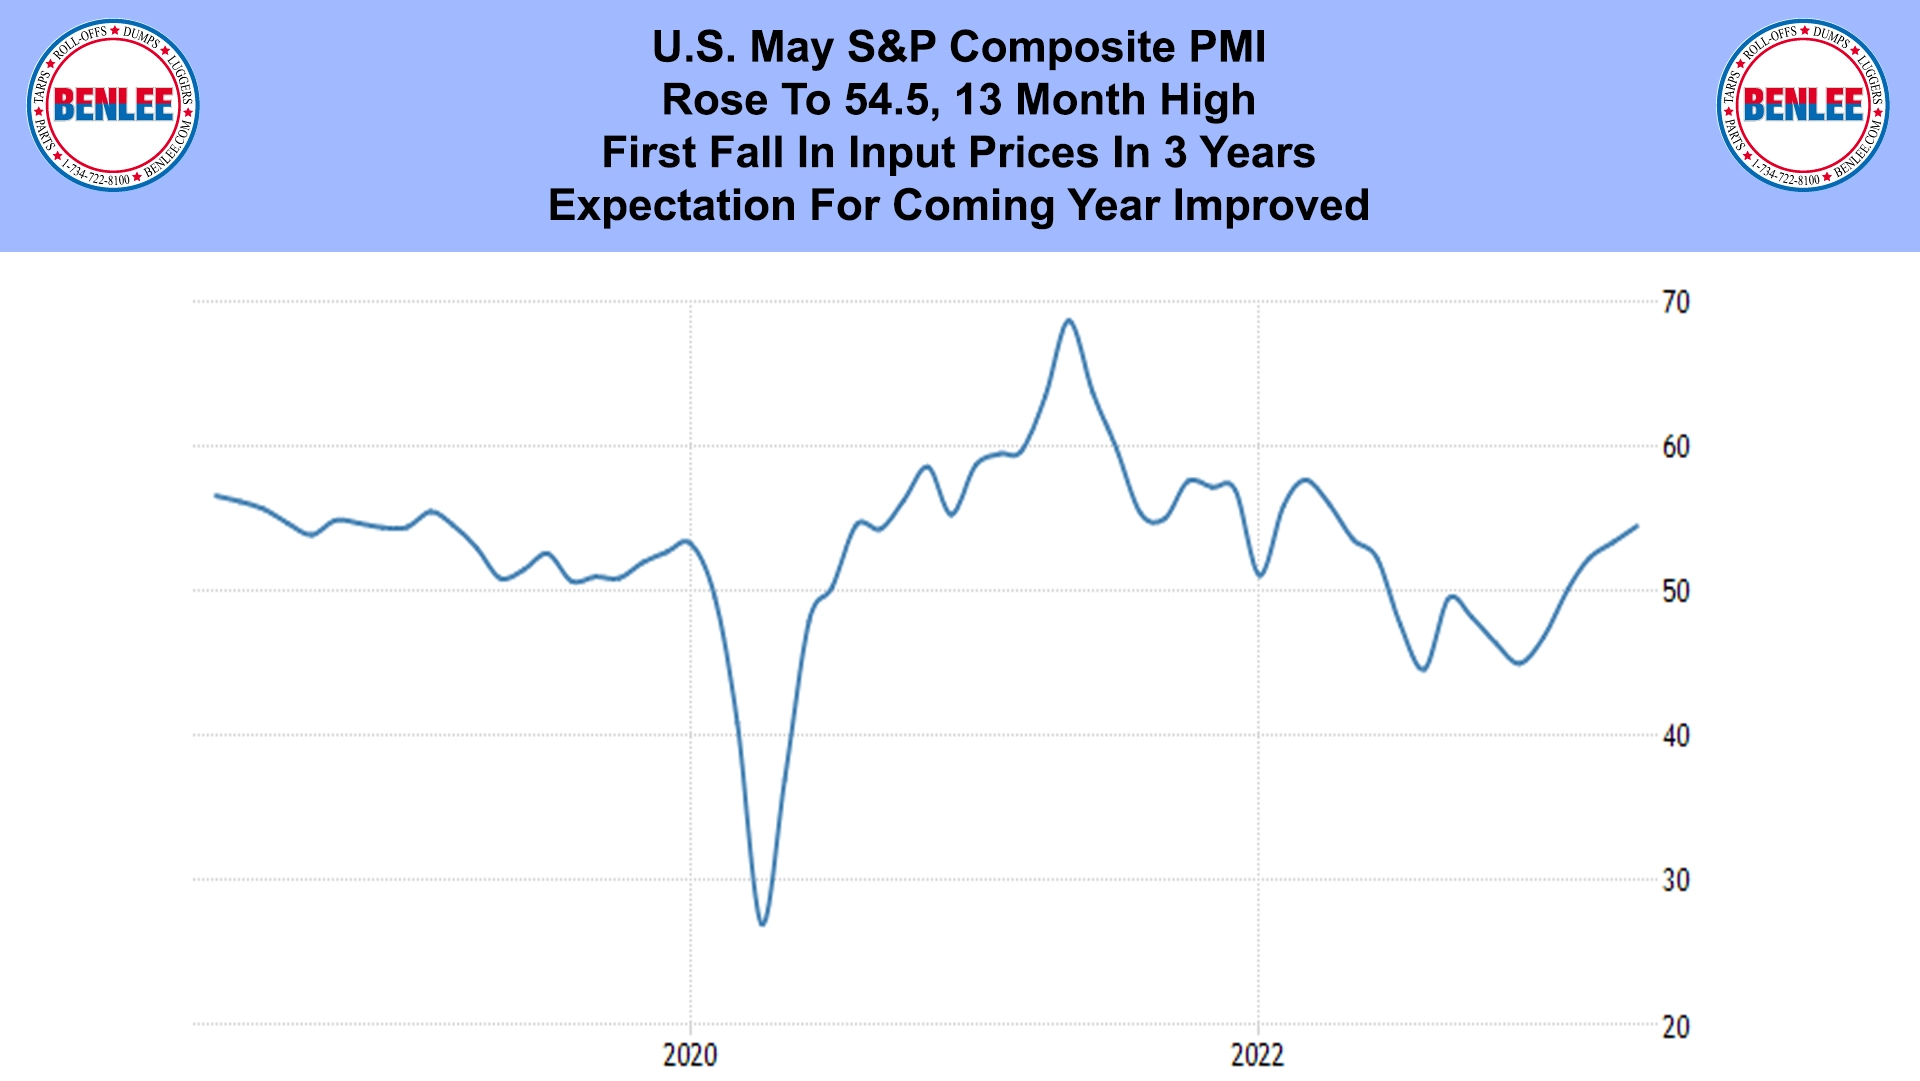 U.S. May S&P Composite PMI